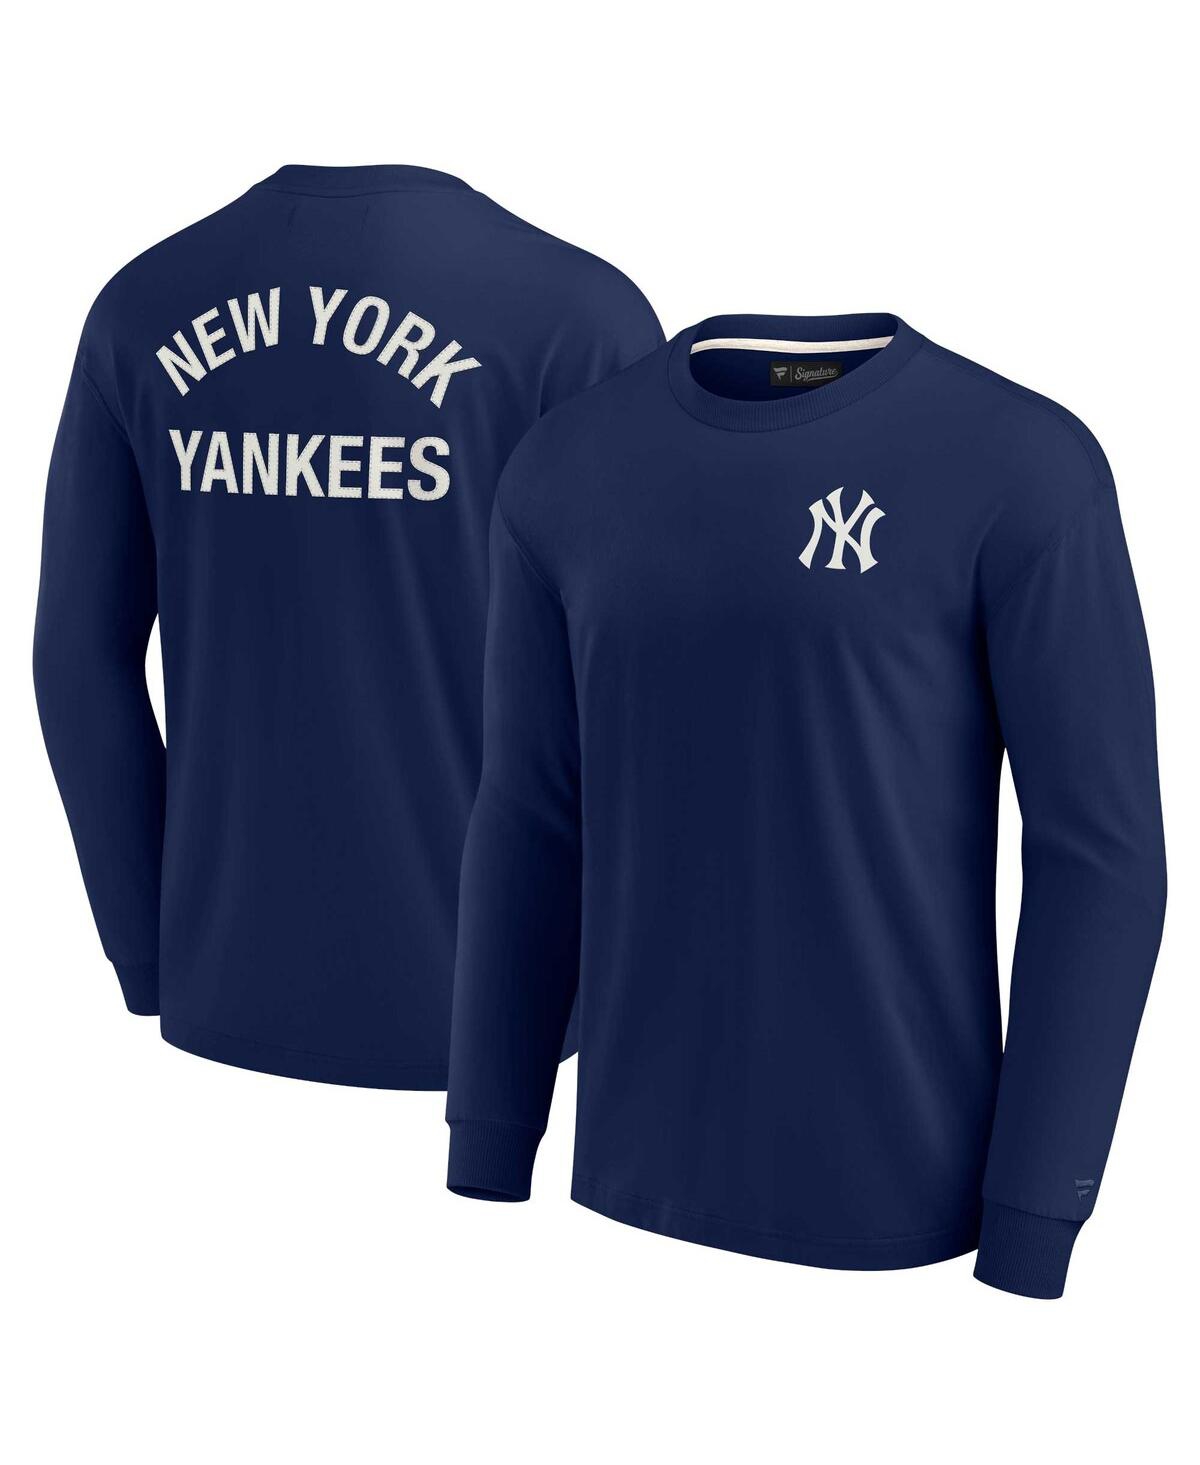 Men's and Women's Fanatics Signature Navy New York Yankees Super Soft Long Sleeve T-shirt - Navy